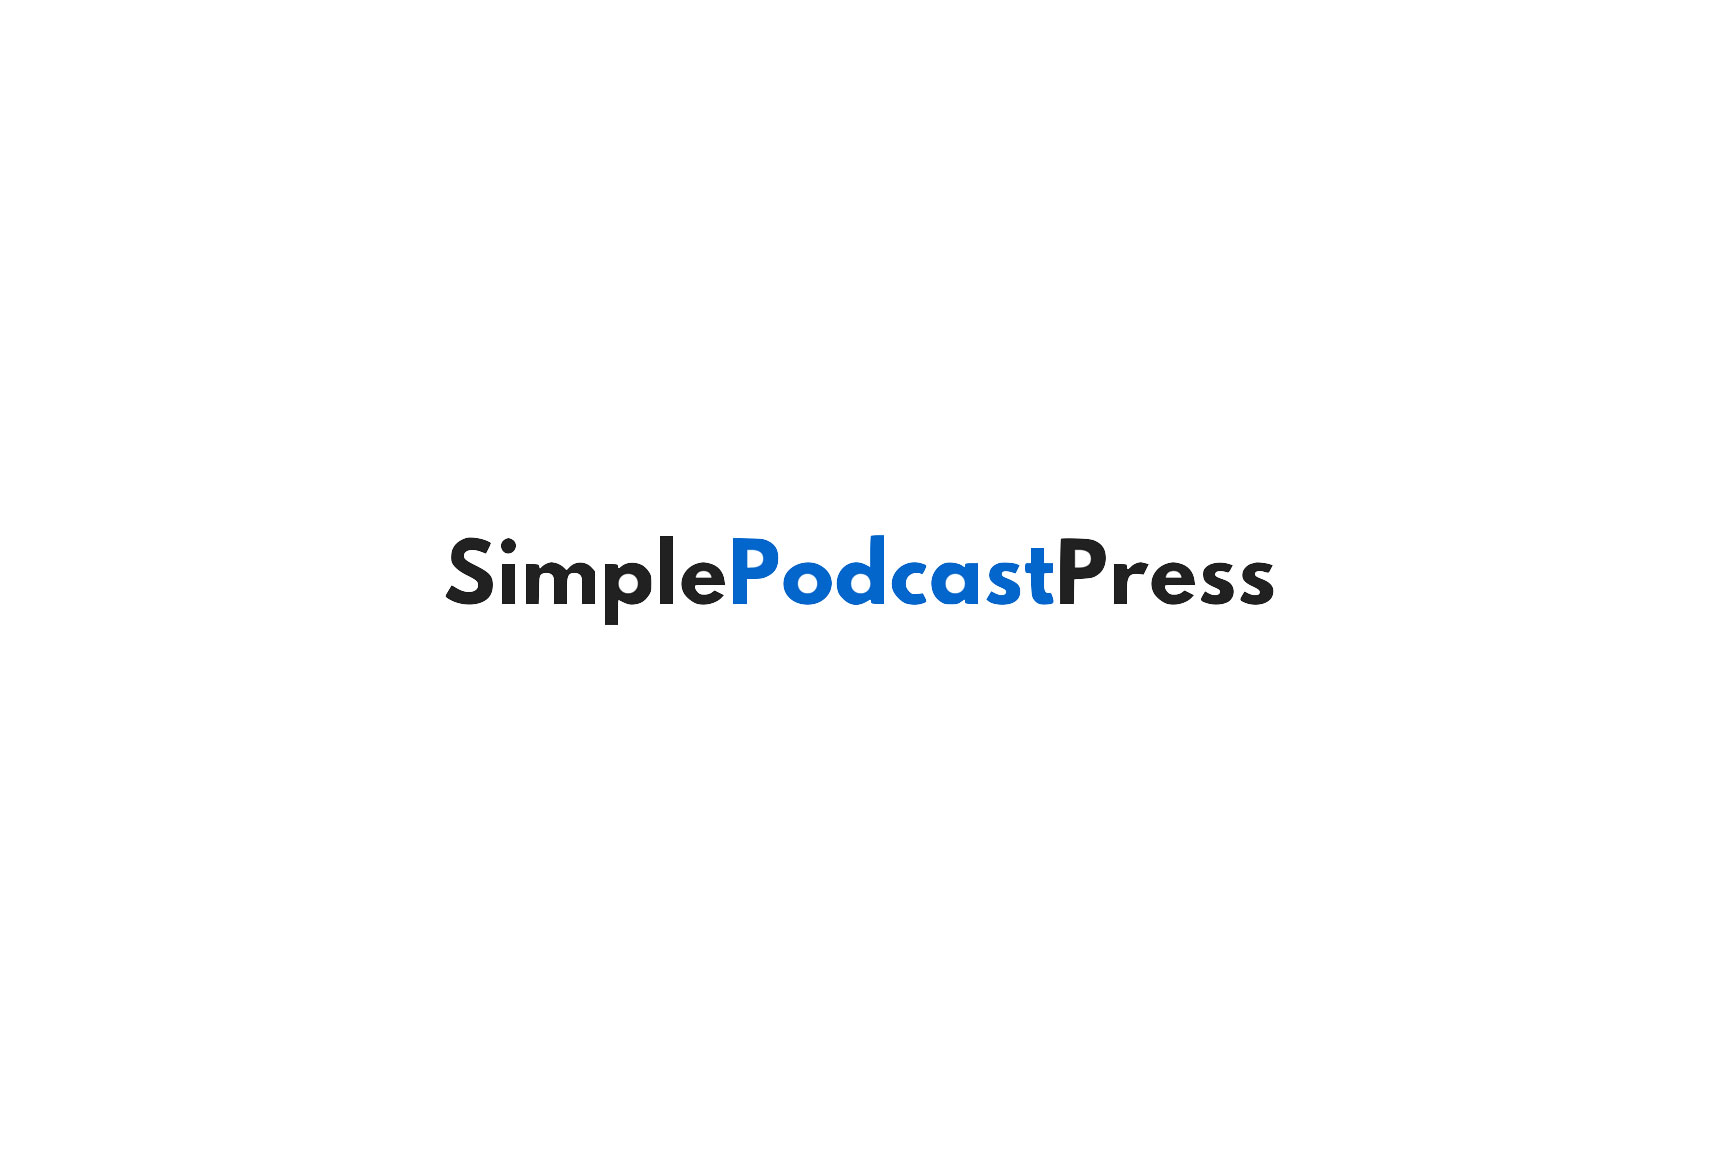 Simple Podcast Press masthead image